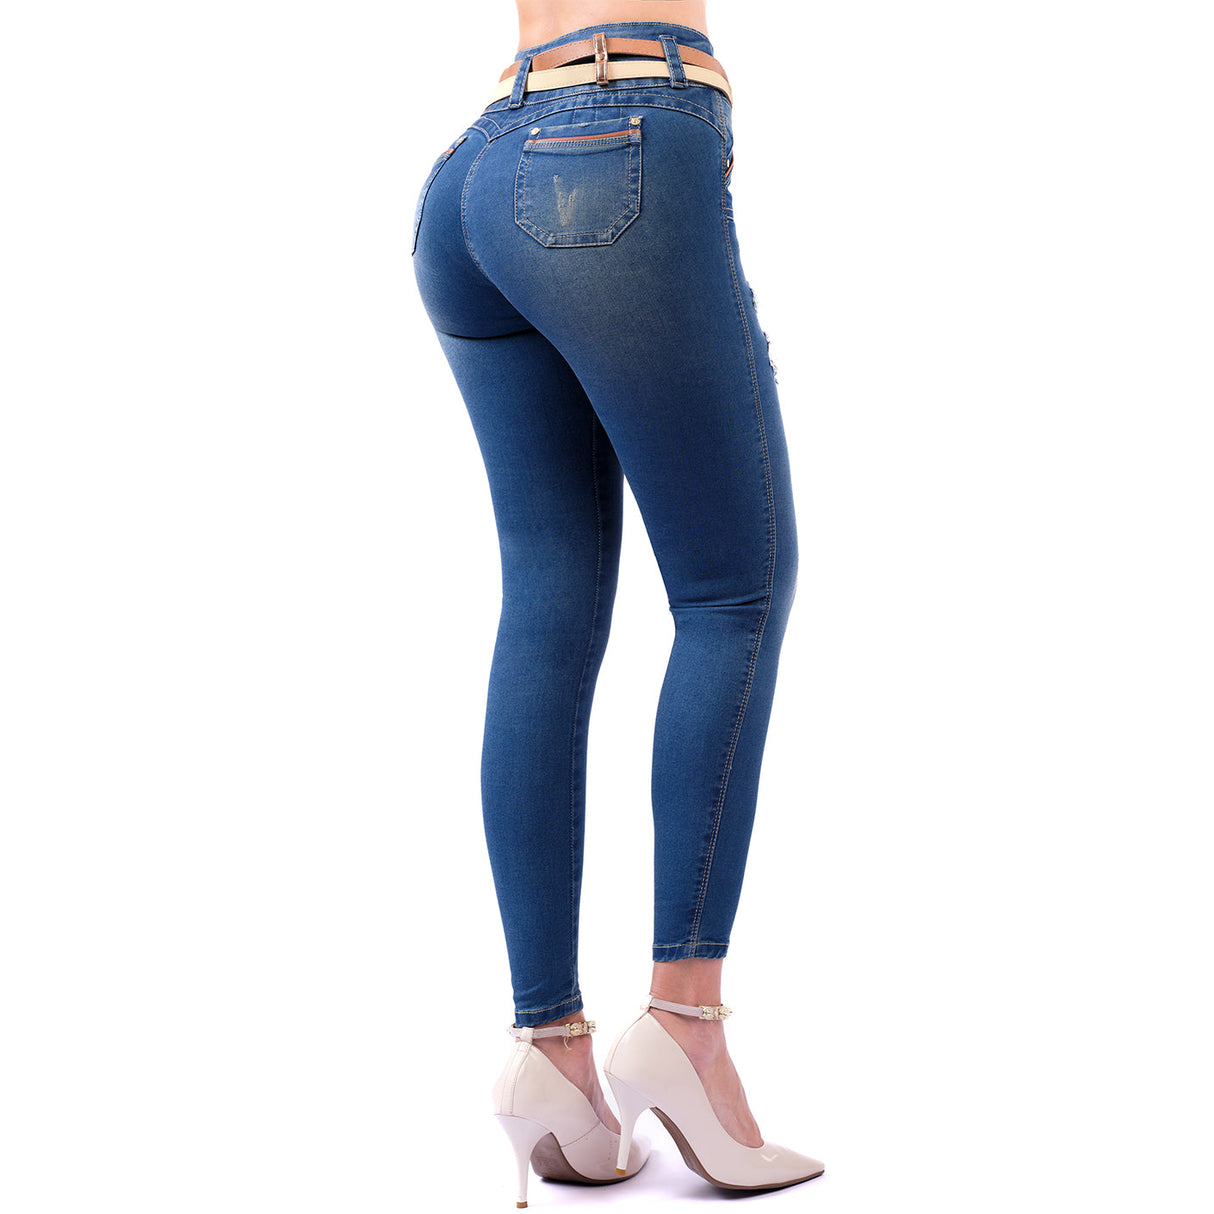  Curve Jeans Butt Lift Slim,Women's Butt Lifting Jeans